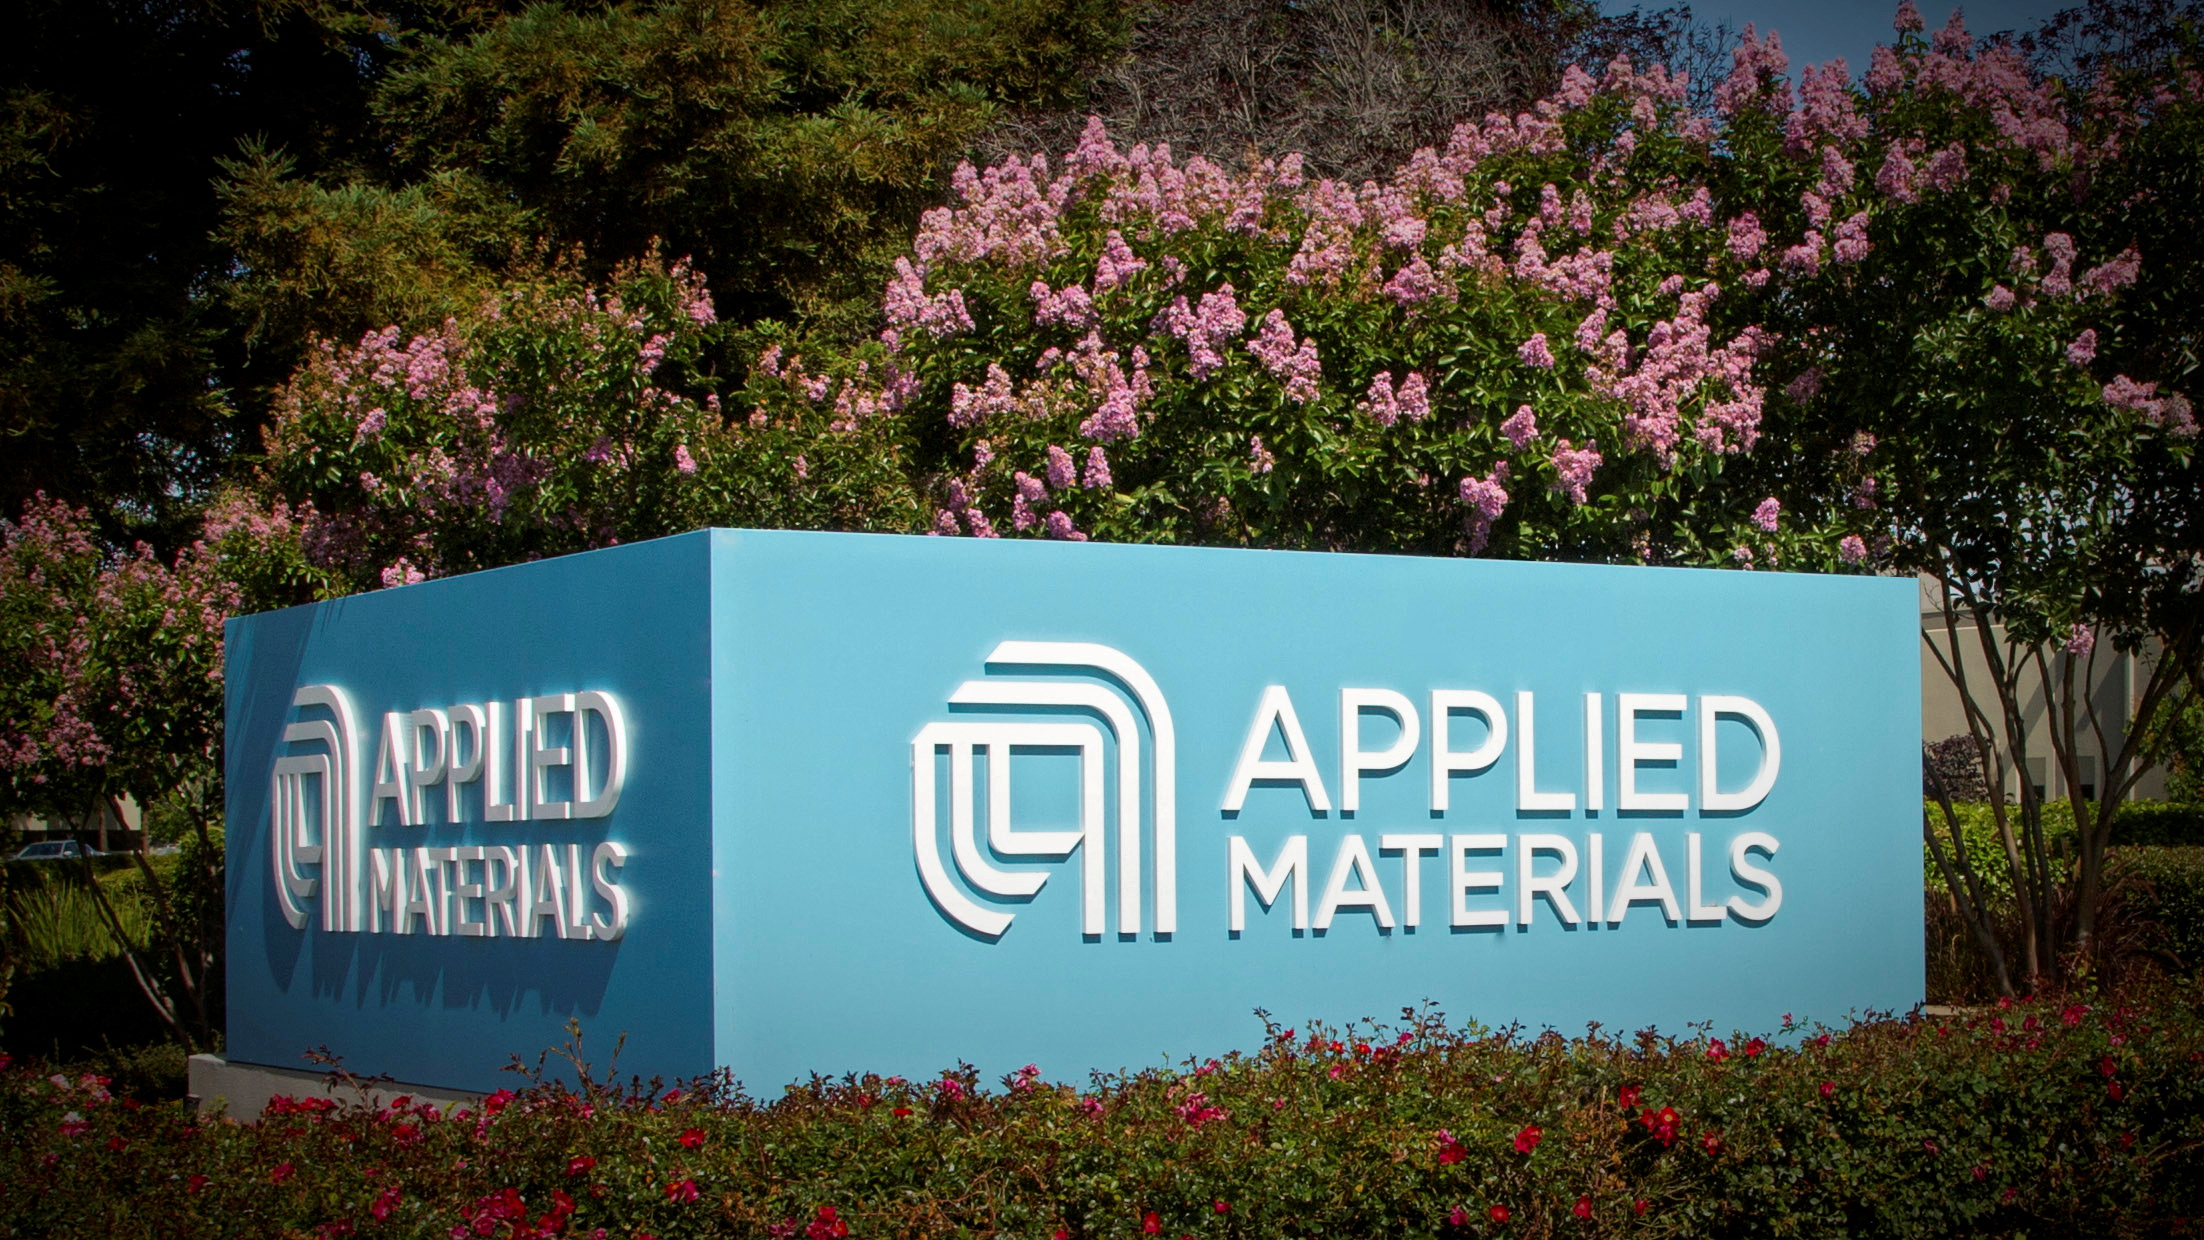 Applied Materials’ new corporate signage photo in Santa Clara California